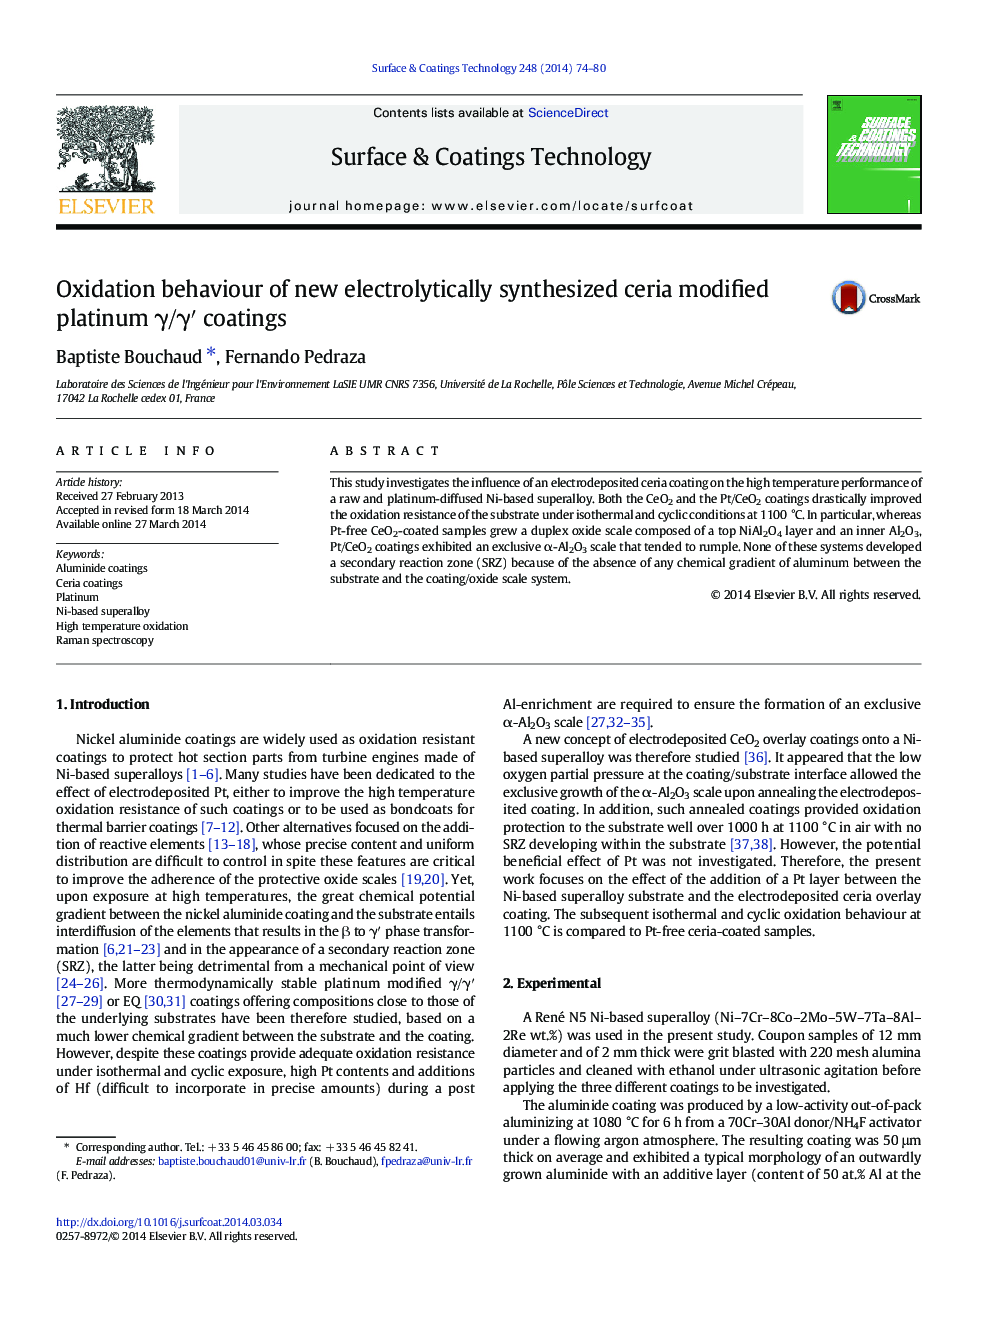 Oxidation behaviour of new electrolytically synthesized ceria modified platinum Î³/Î³â² coatings